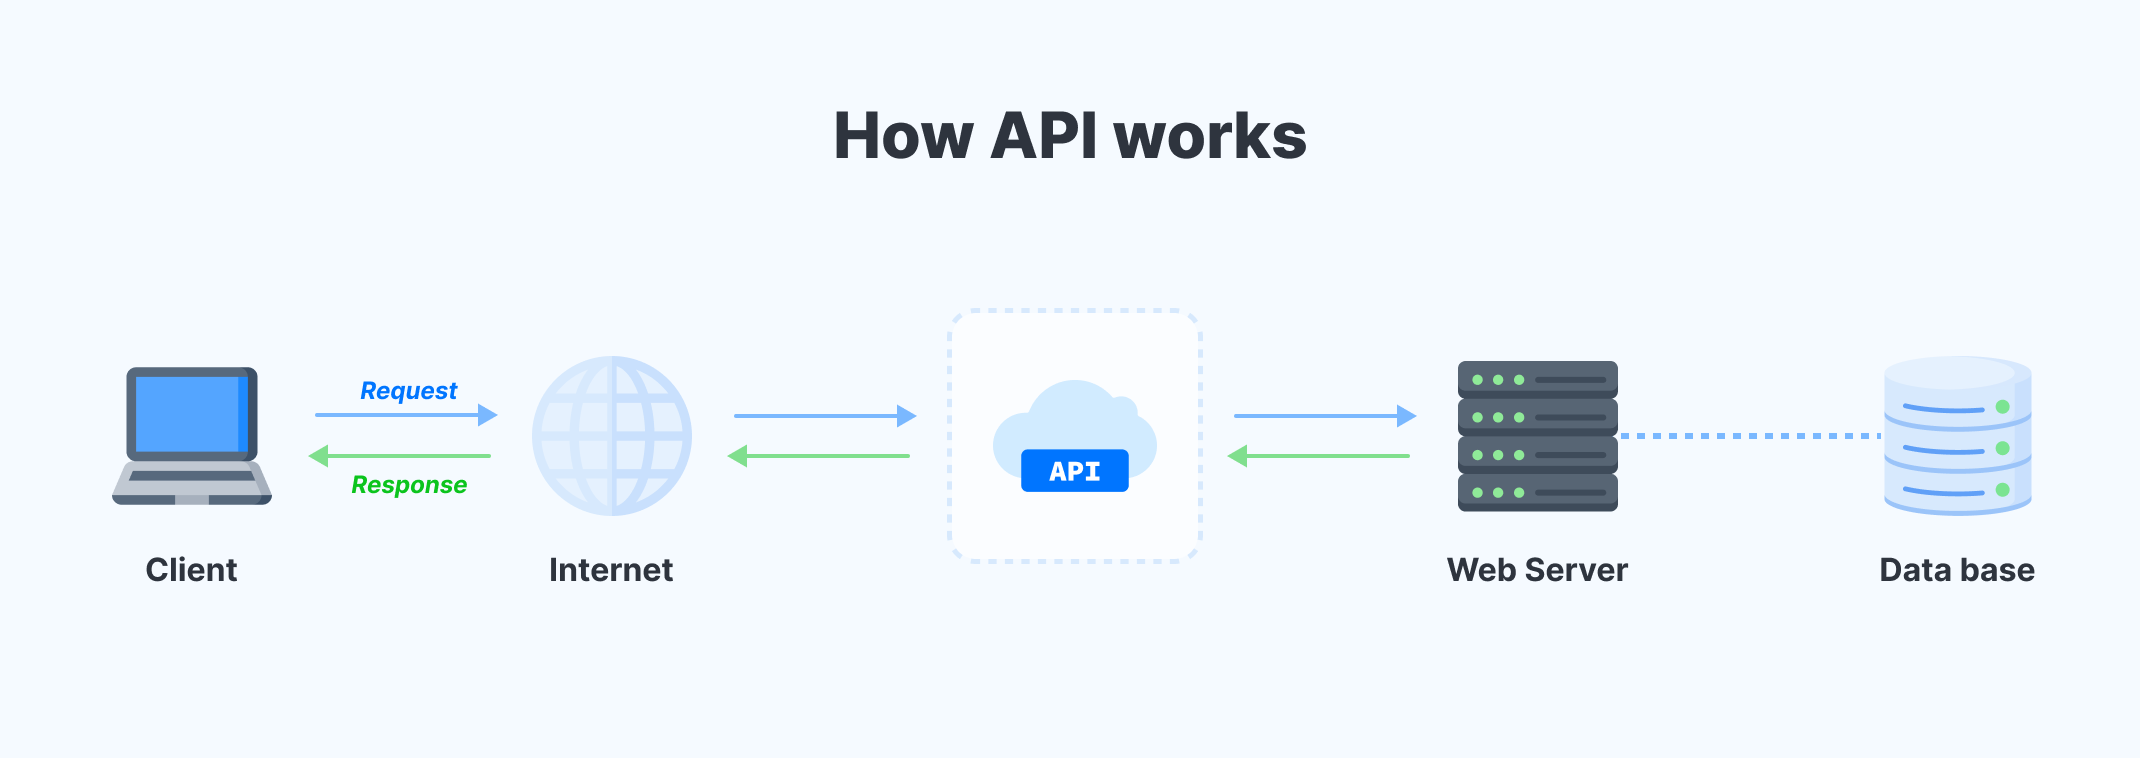 Как работает API